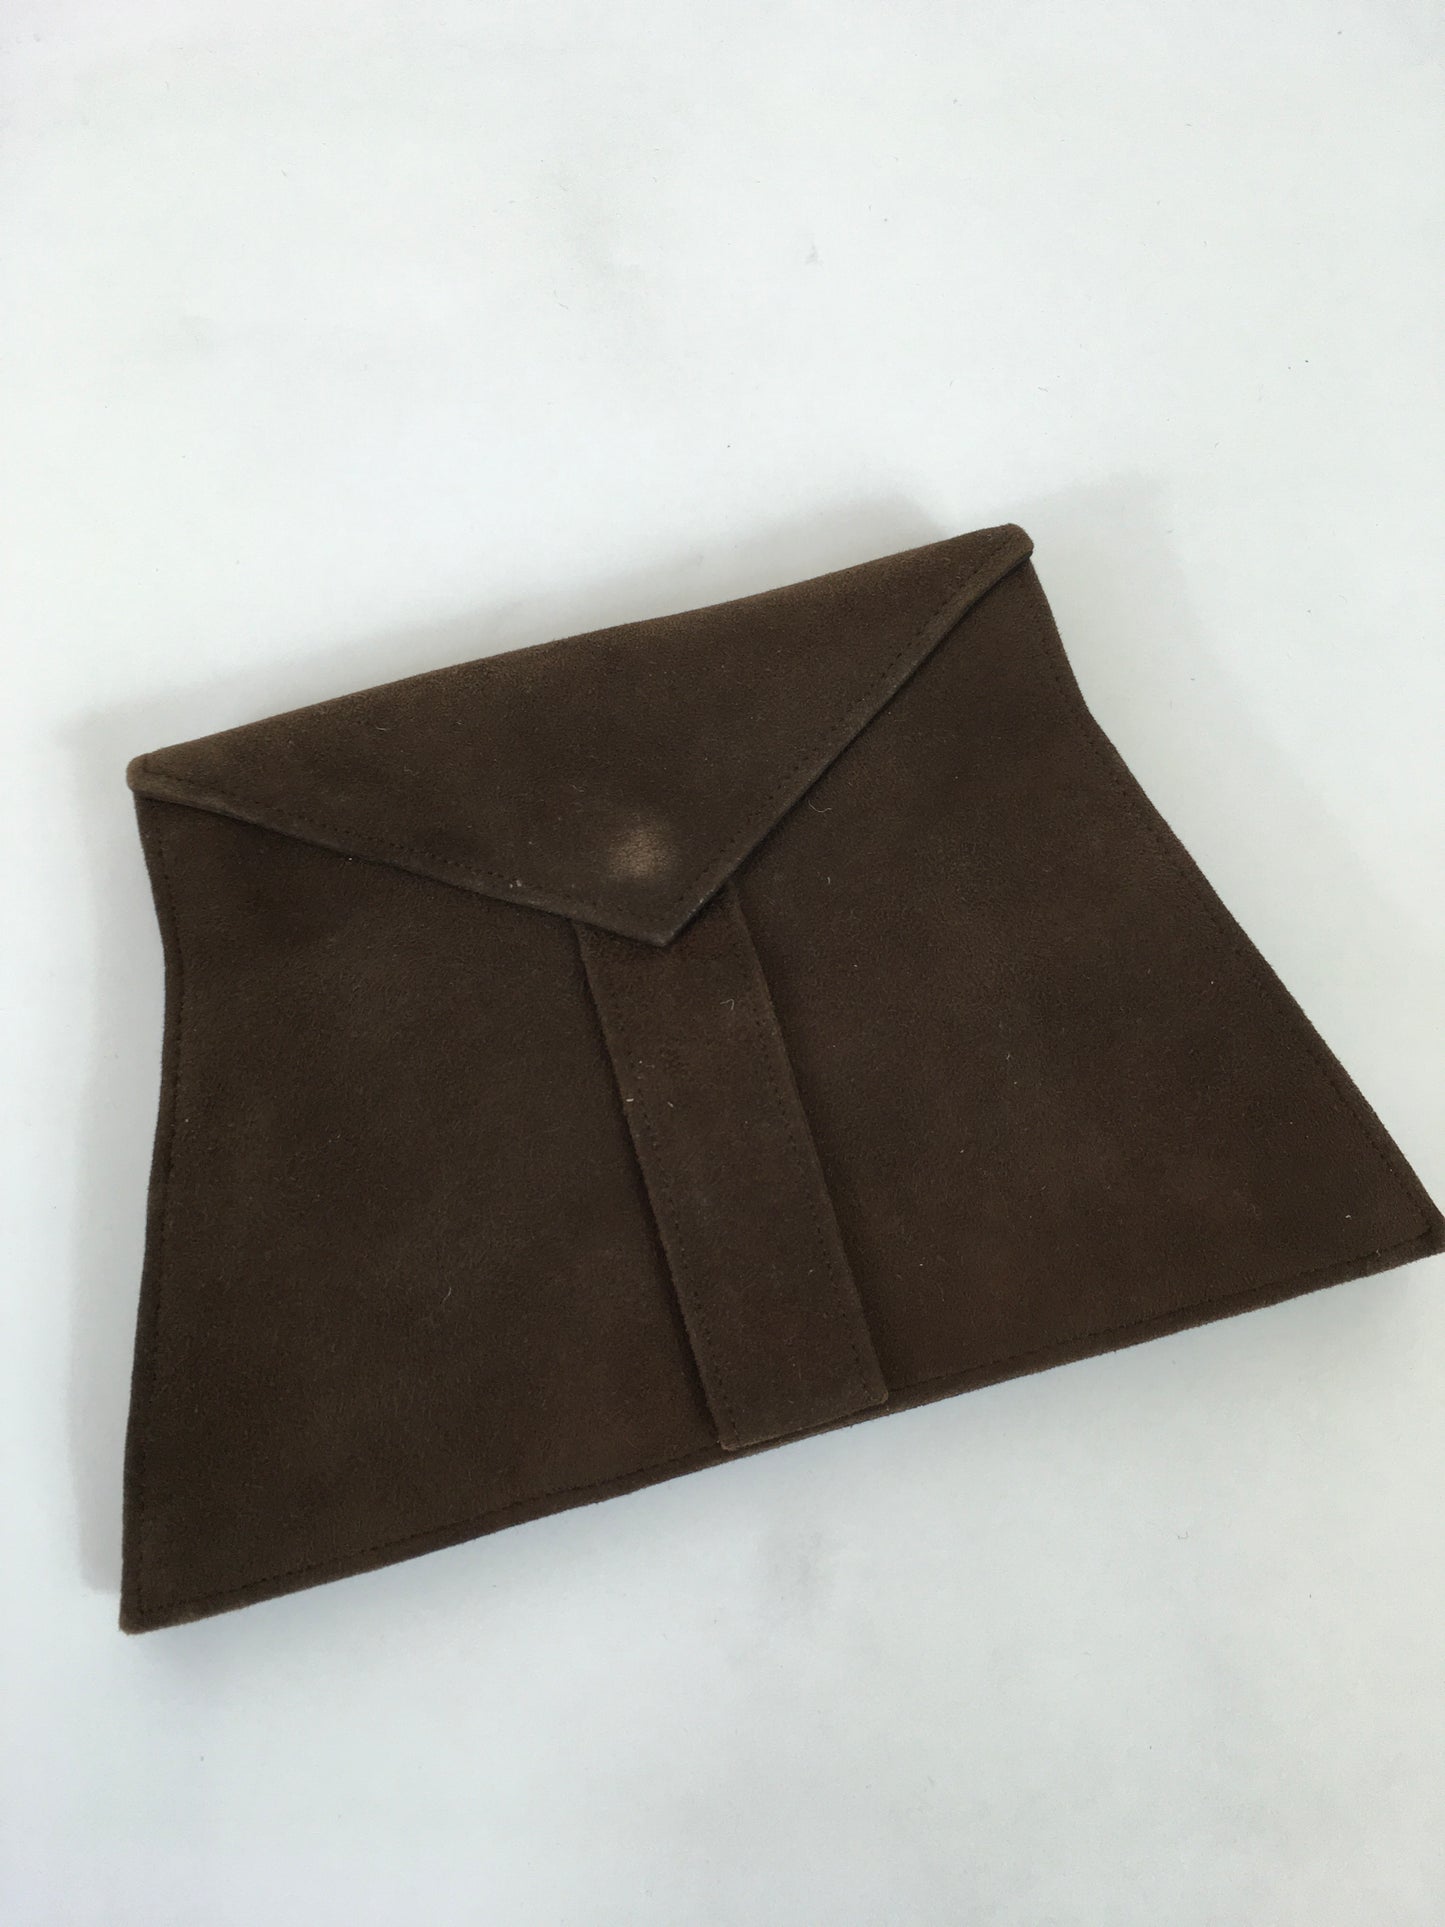 Original 1930's Exquisite Suede Evening Handbag - In Chocolate Brown Suede with Paste Embellishment